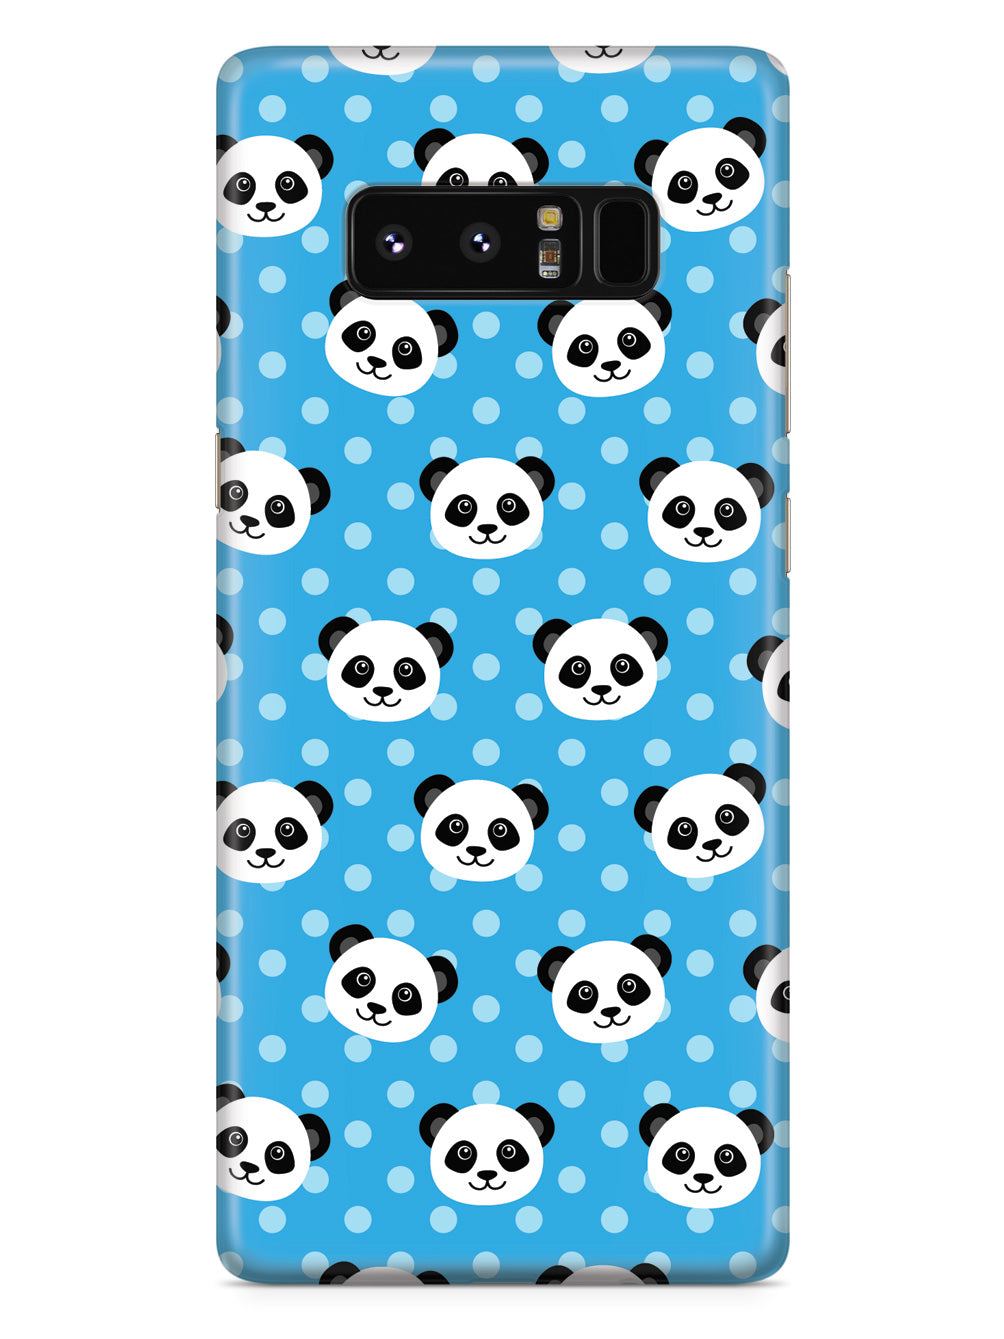 Cute Panda Pattern - Blue Polka Dots Case